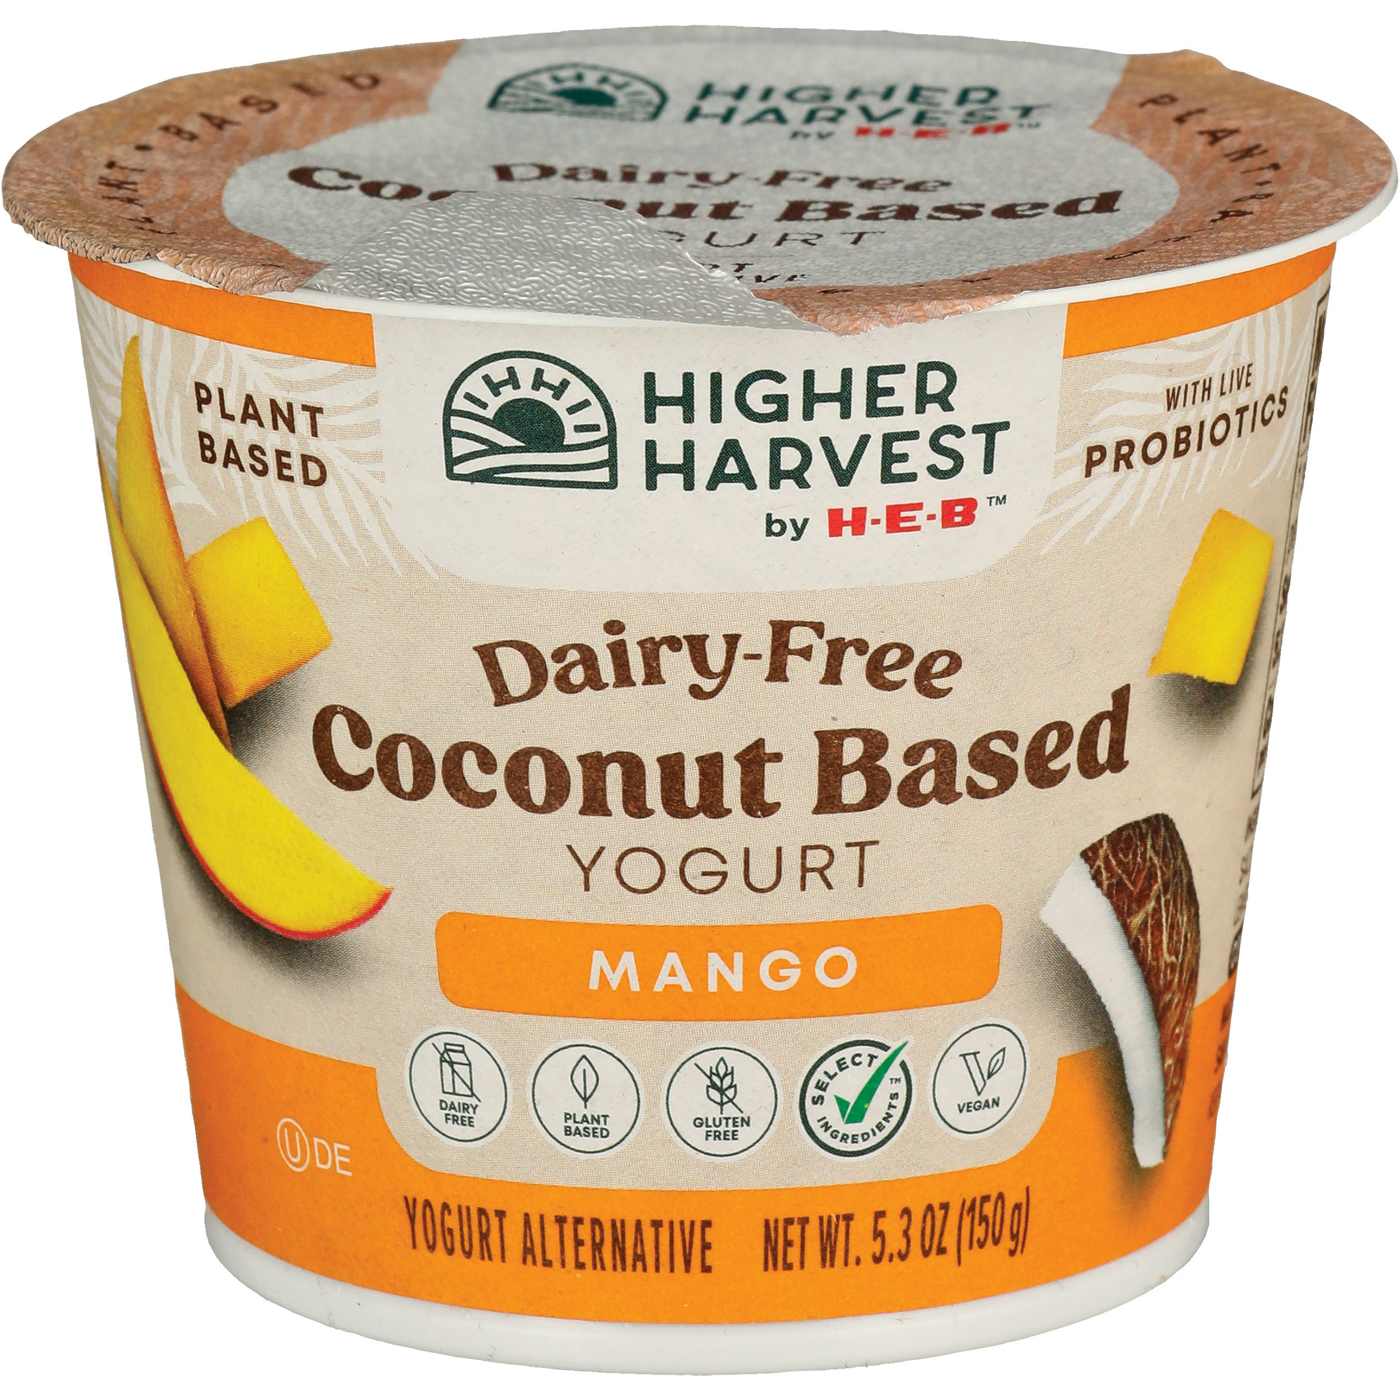 Higher Harvest by H-E-B Dairy-Free Coconut-Based Yogurt – Mango; image 3 of 3